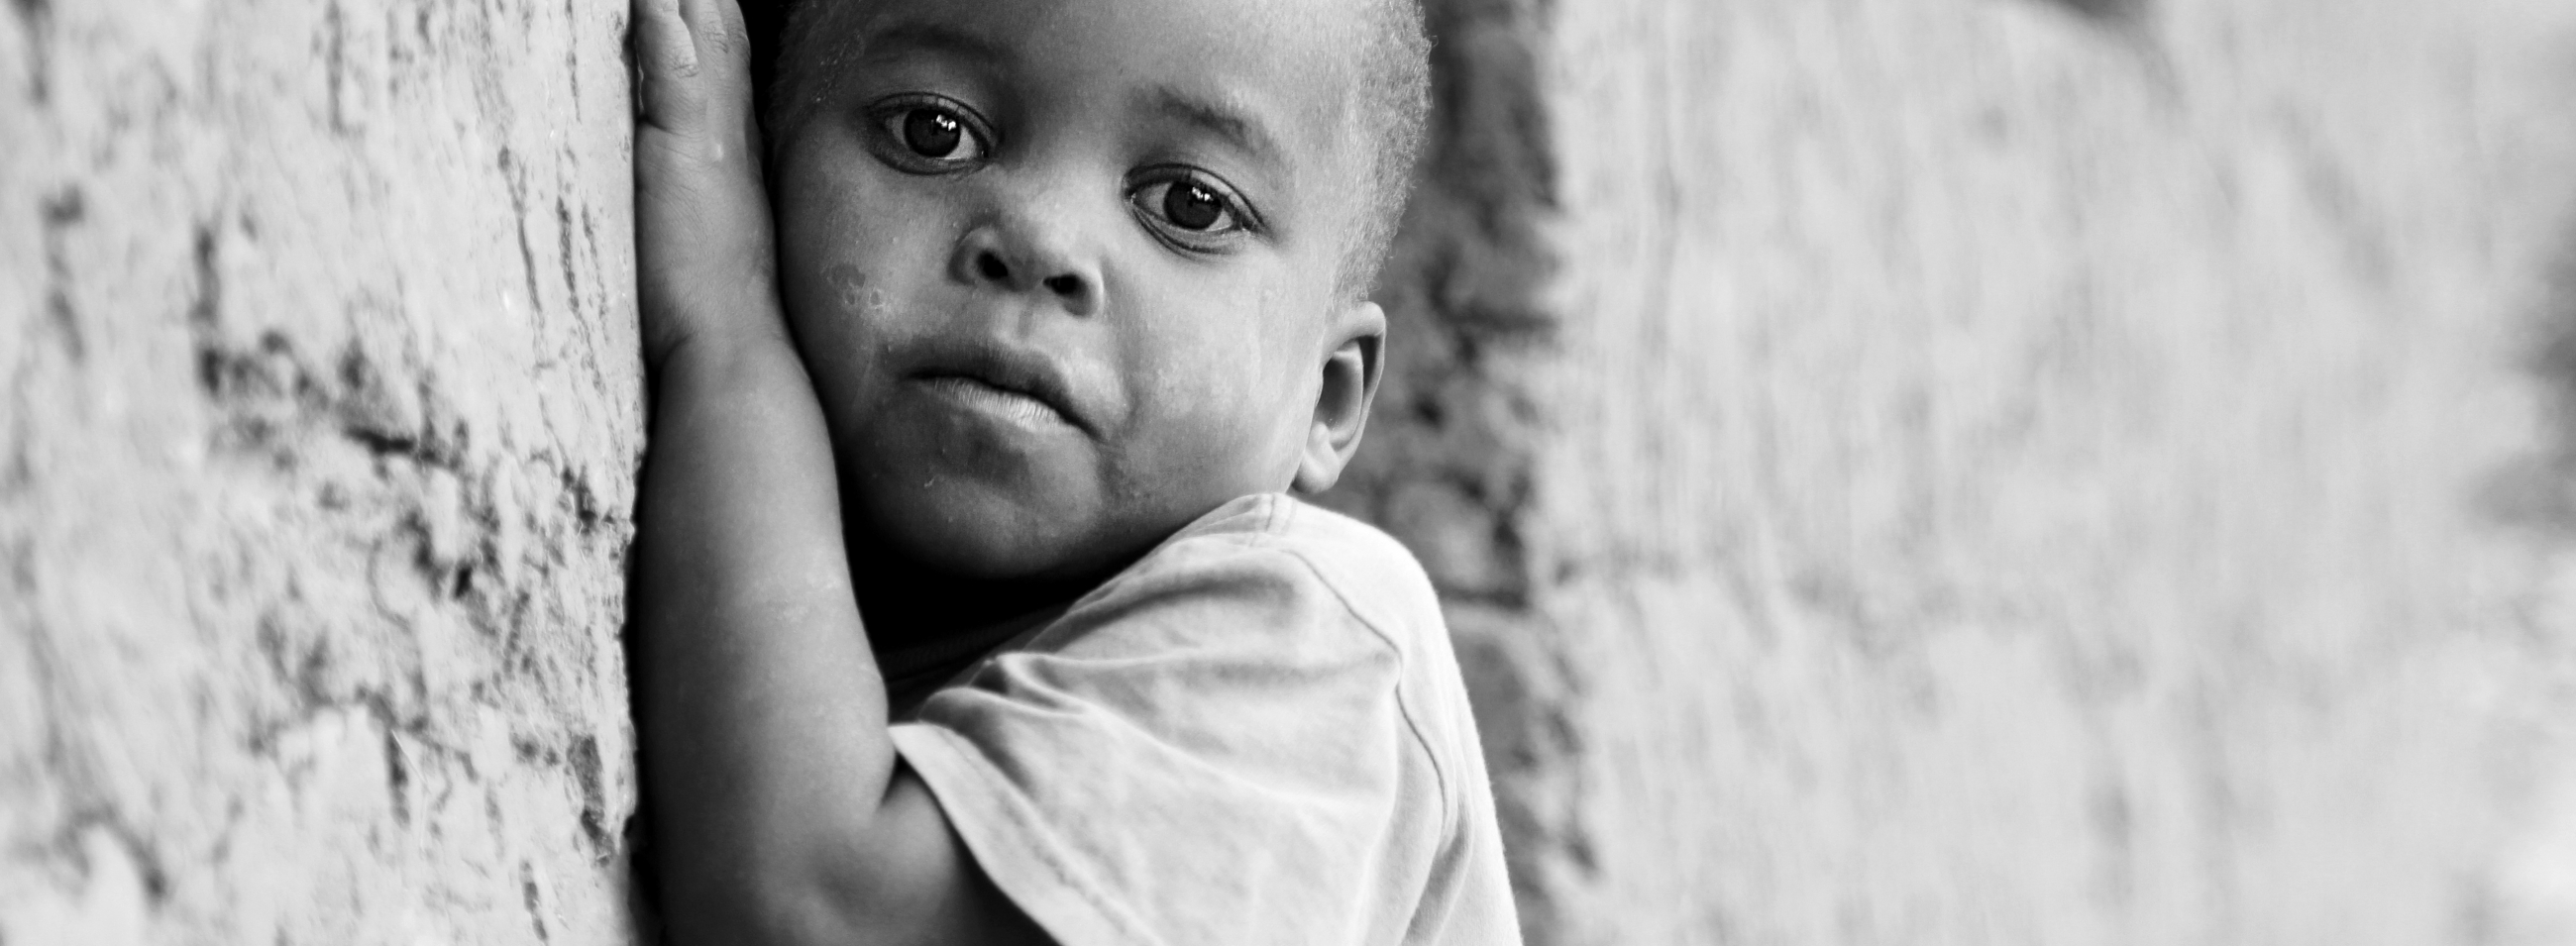 children-of-uganda-1994833